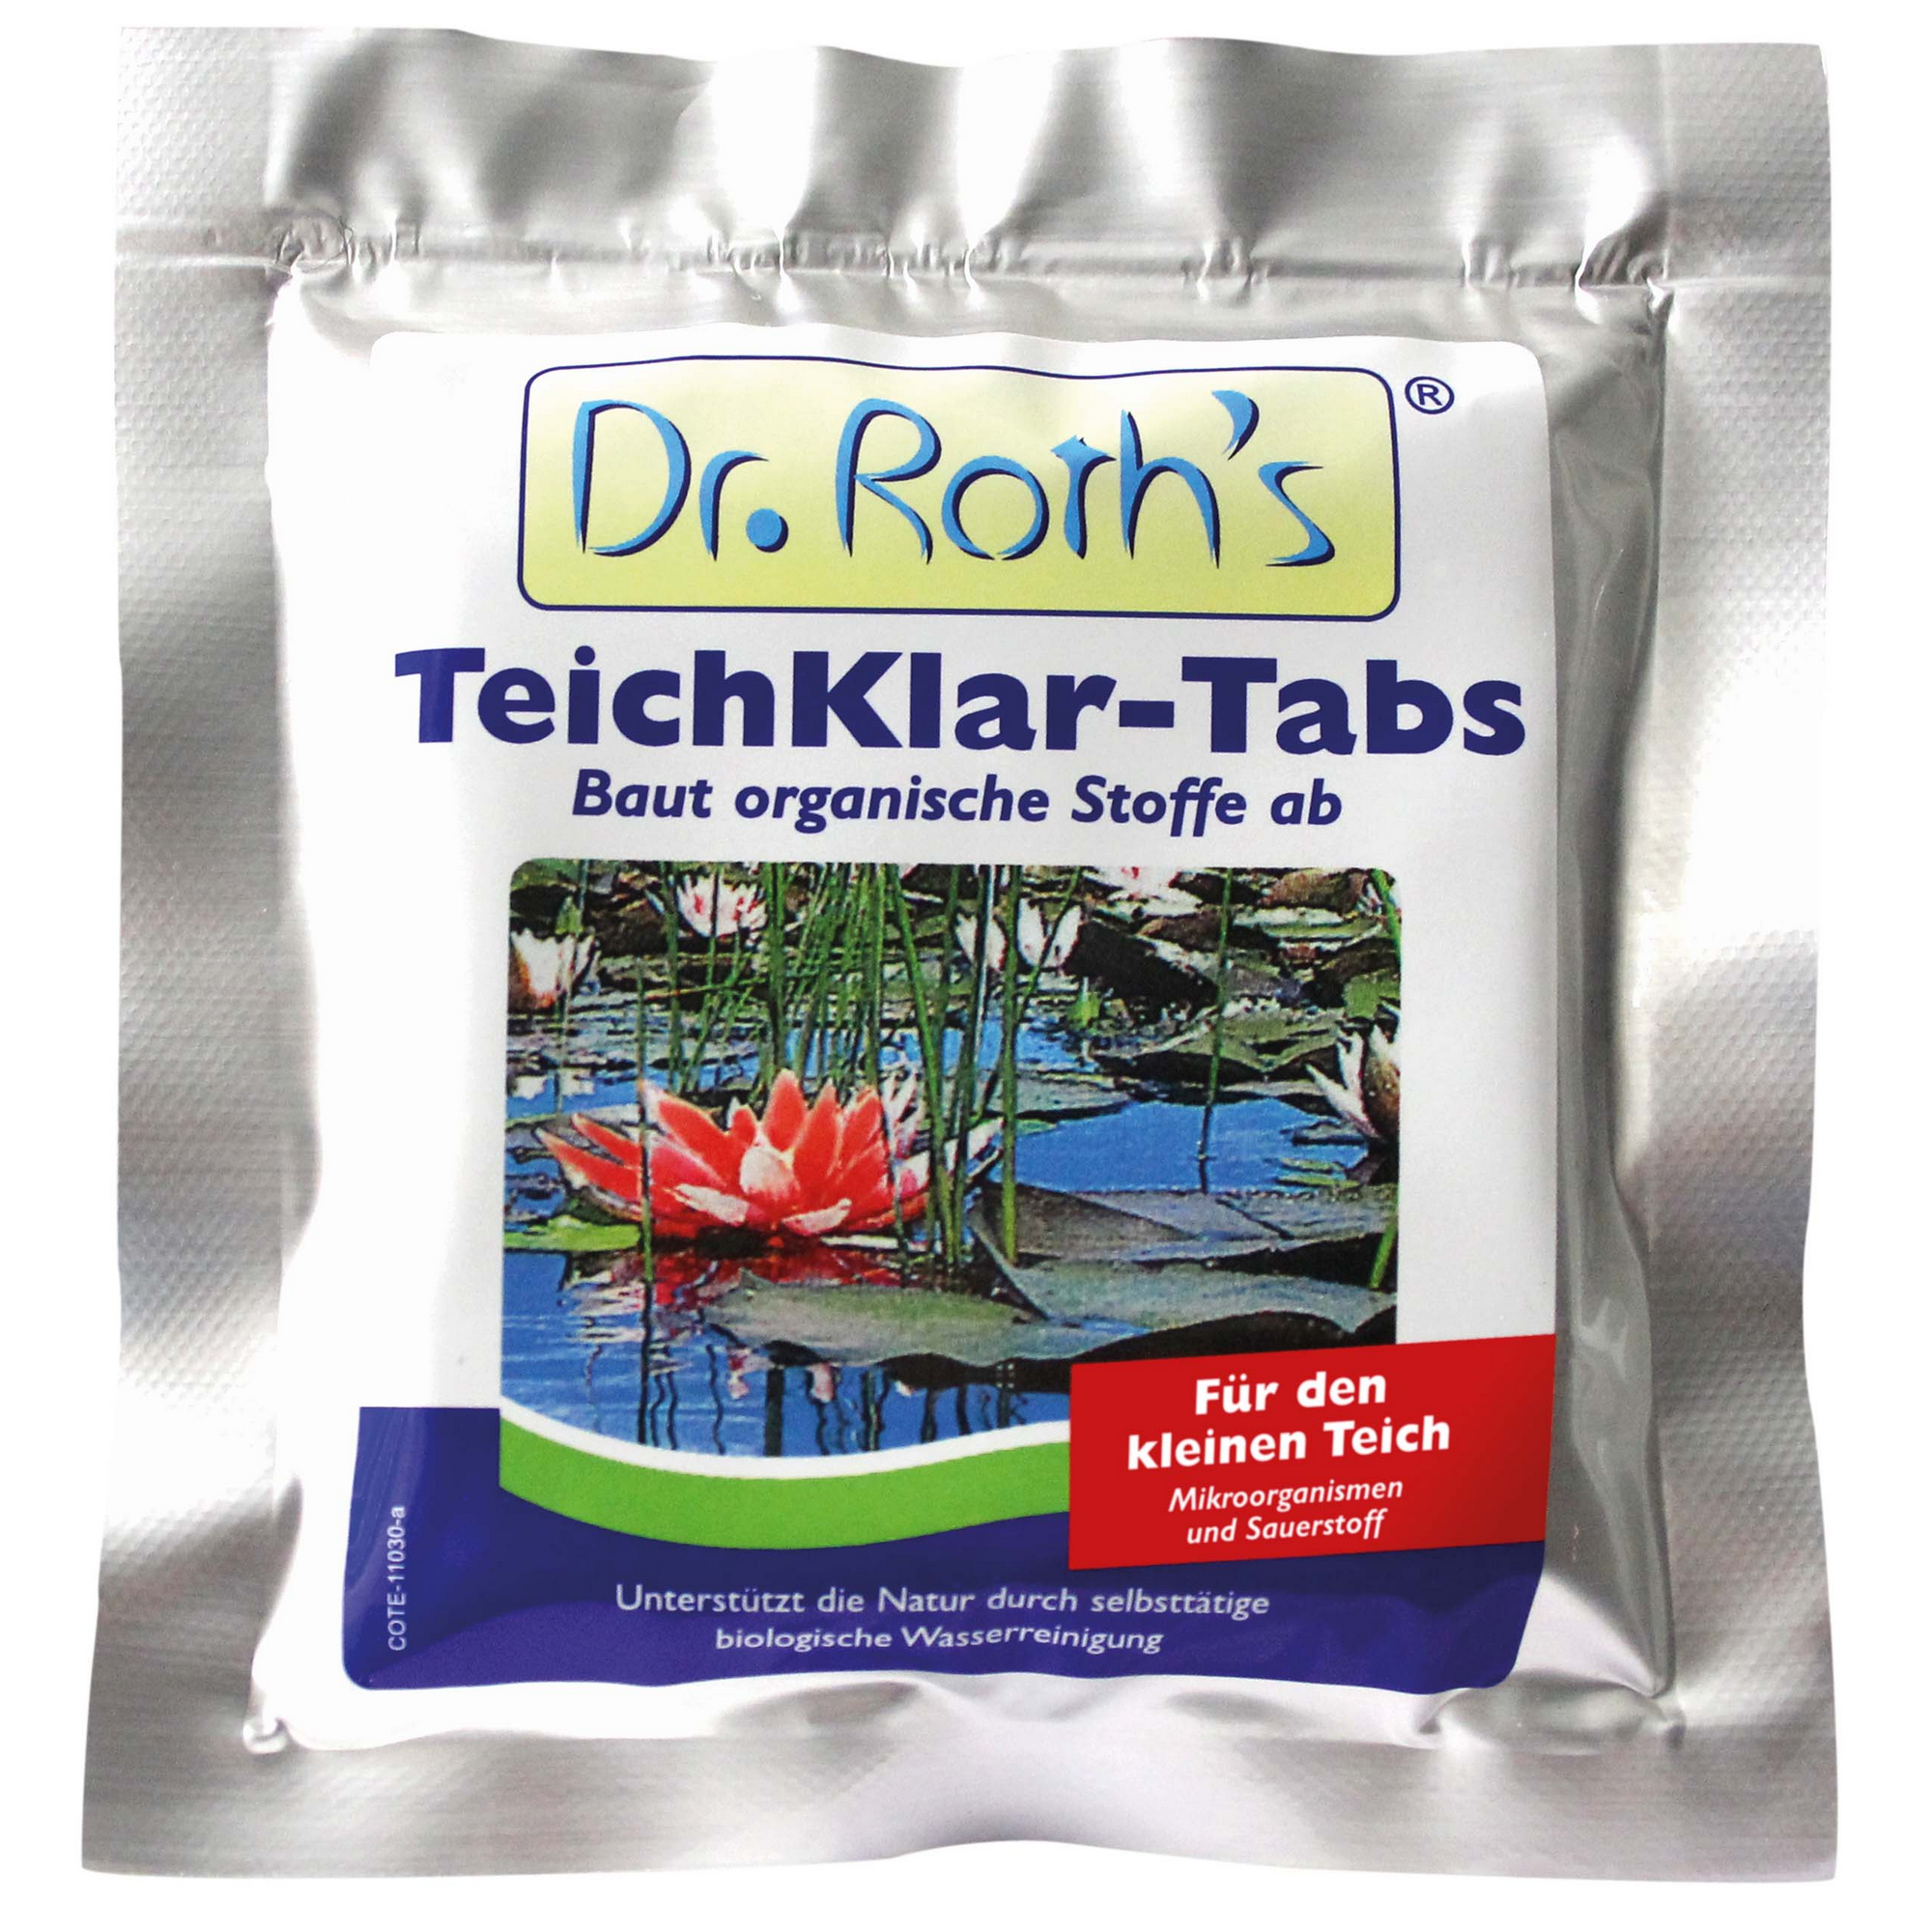 Teichpflege 'Dr. Roth's TeichKlar'-Tabs 4 Stück + product picture